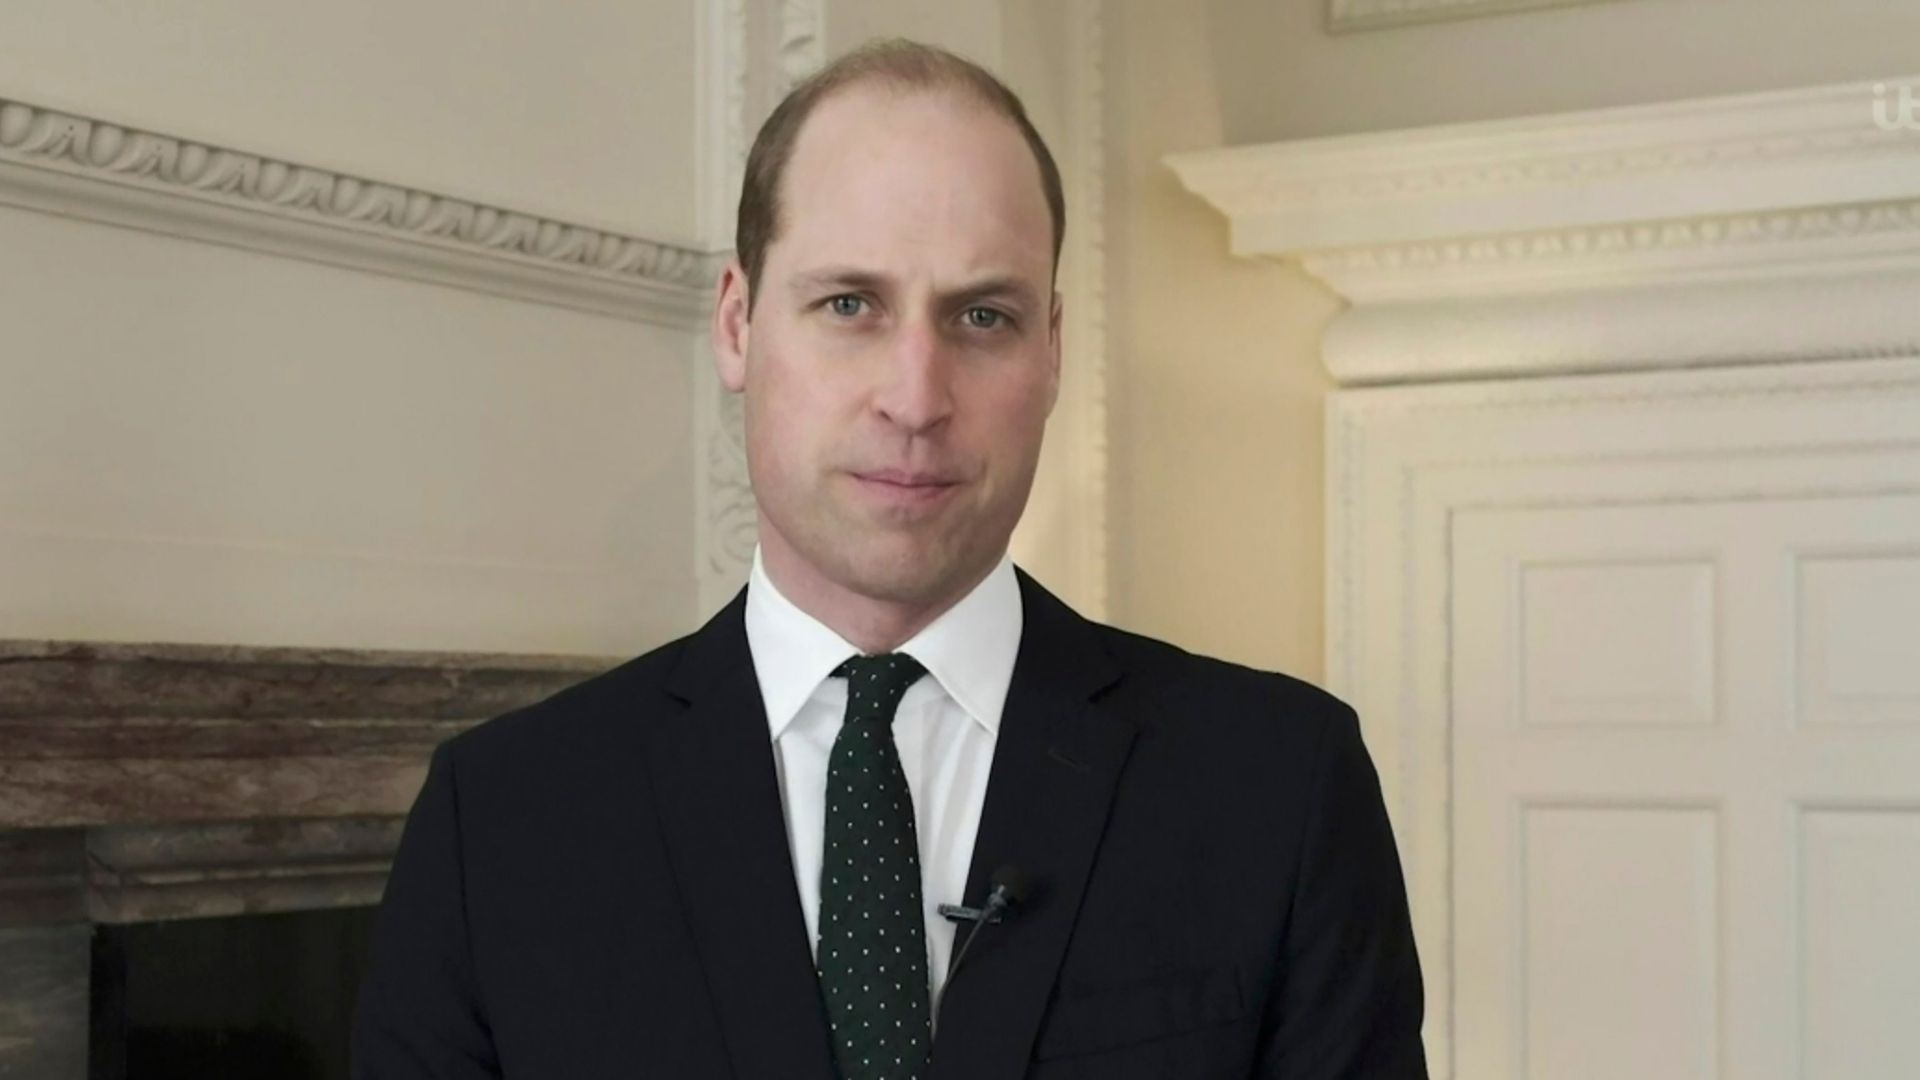 Prince William wearing a black suit as he speaks on Lorraine. 